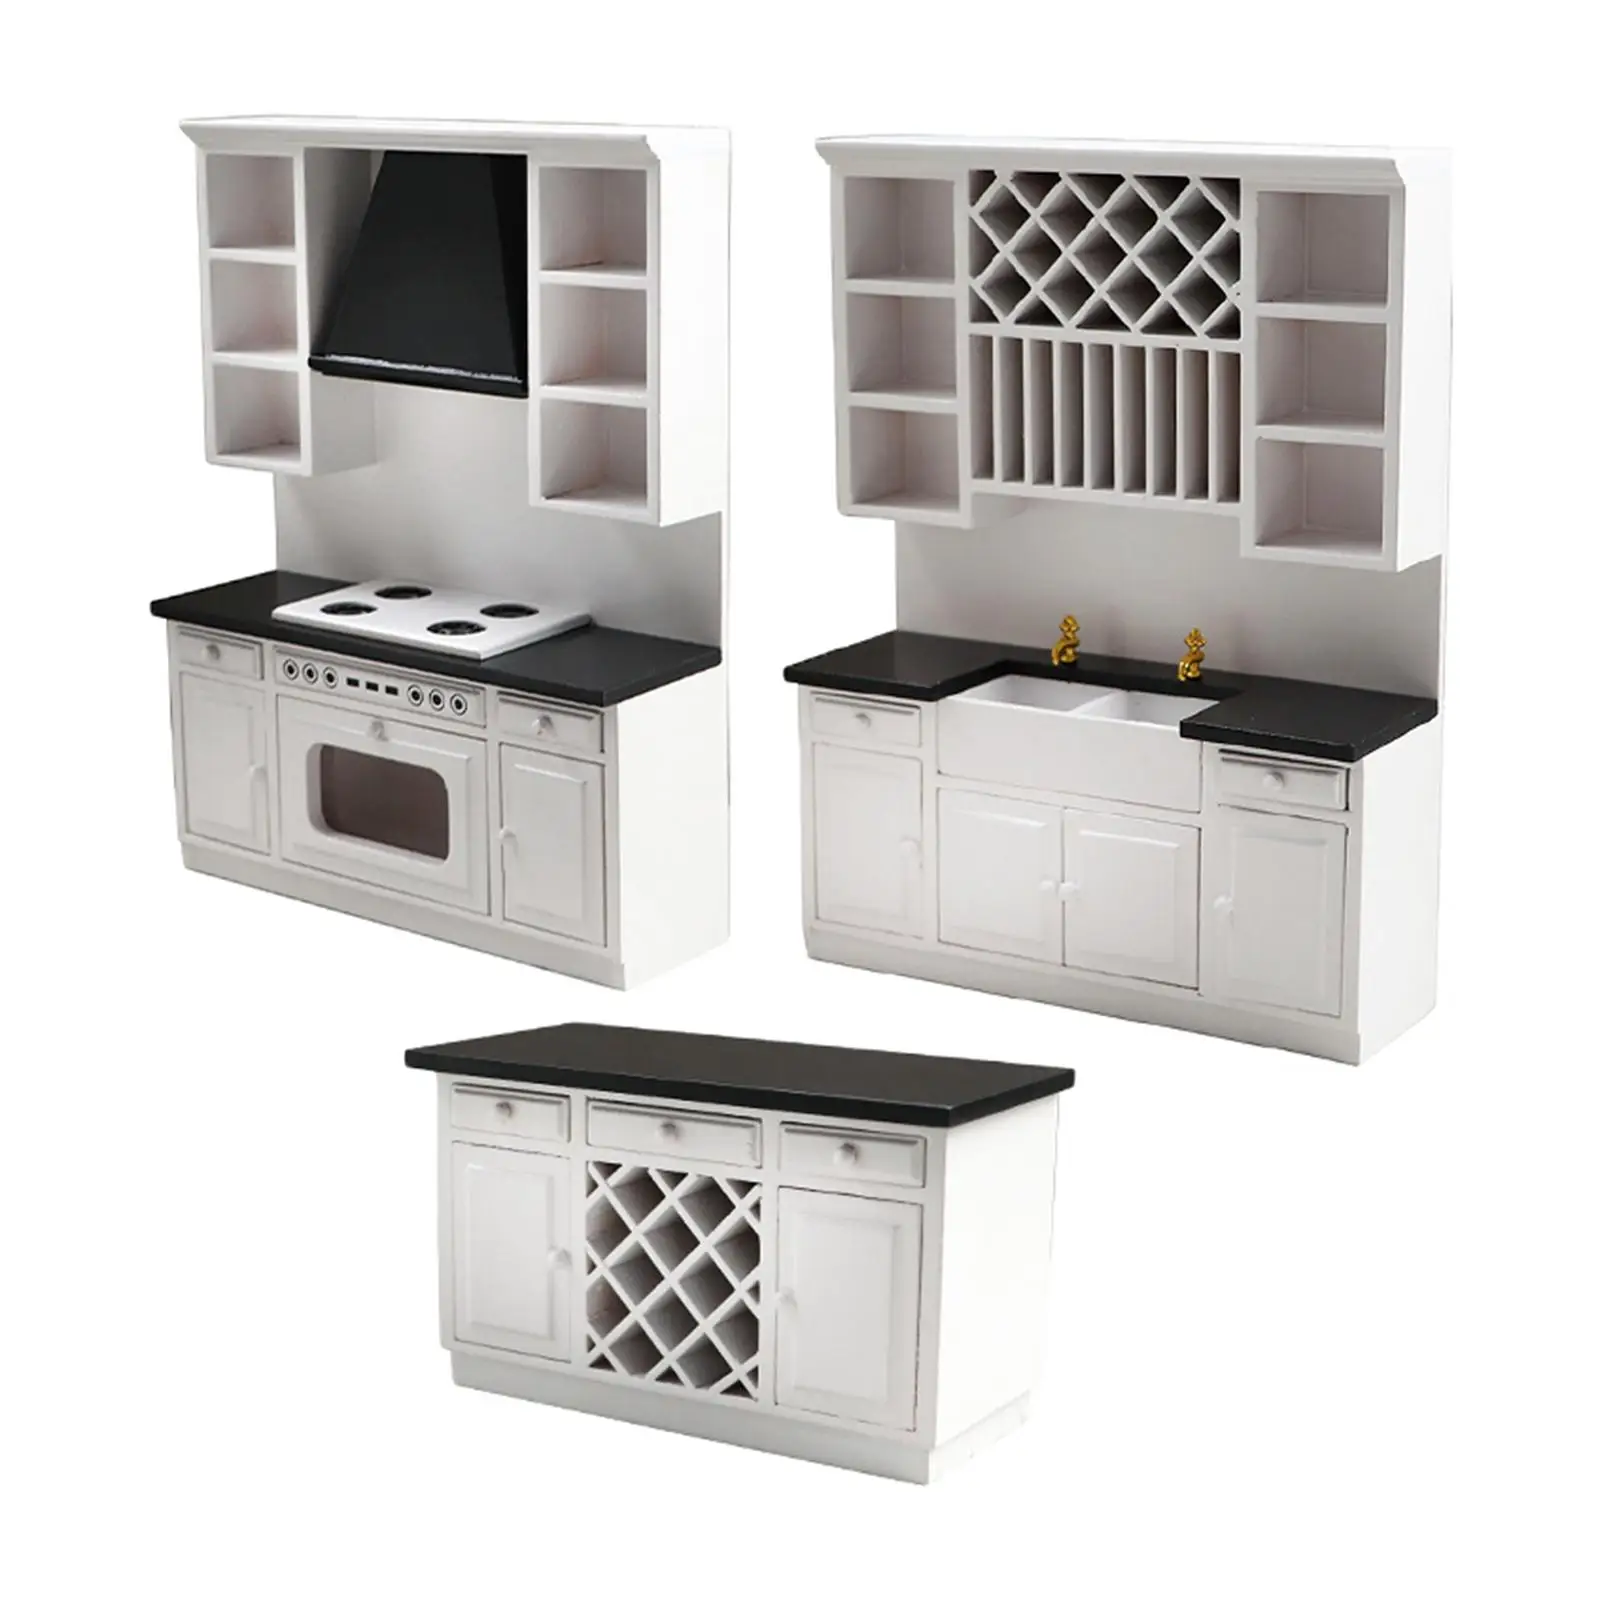 Dollhouse Kitchen Cabinet Dining Room Furniture Set Doll House DIY Decor Mini Bar Counter Furniture